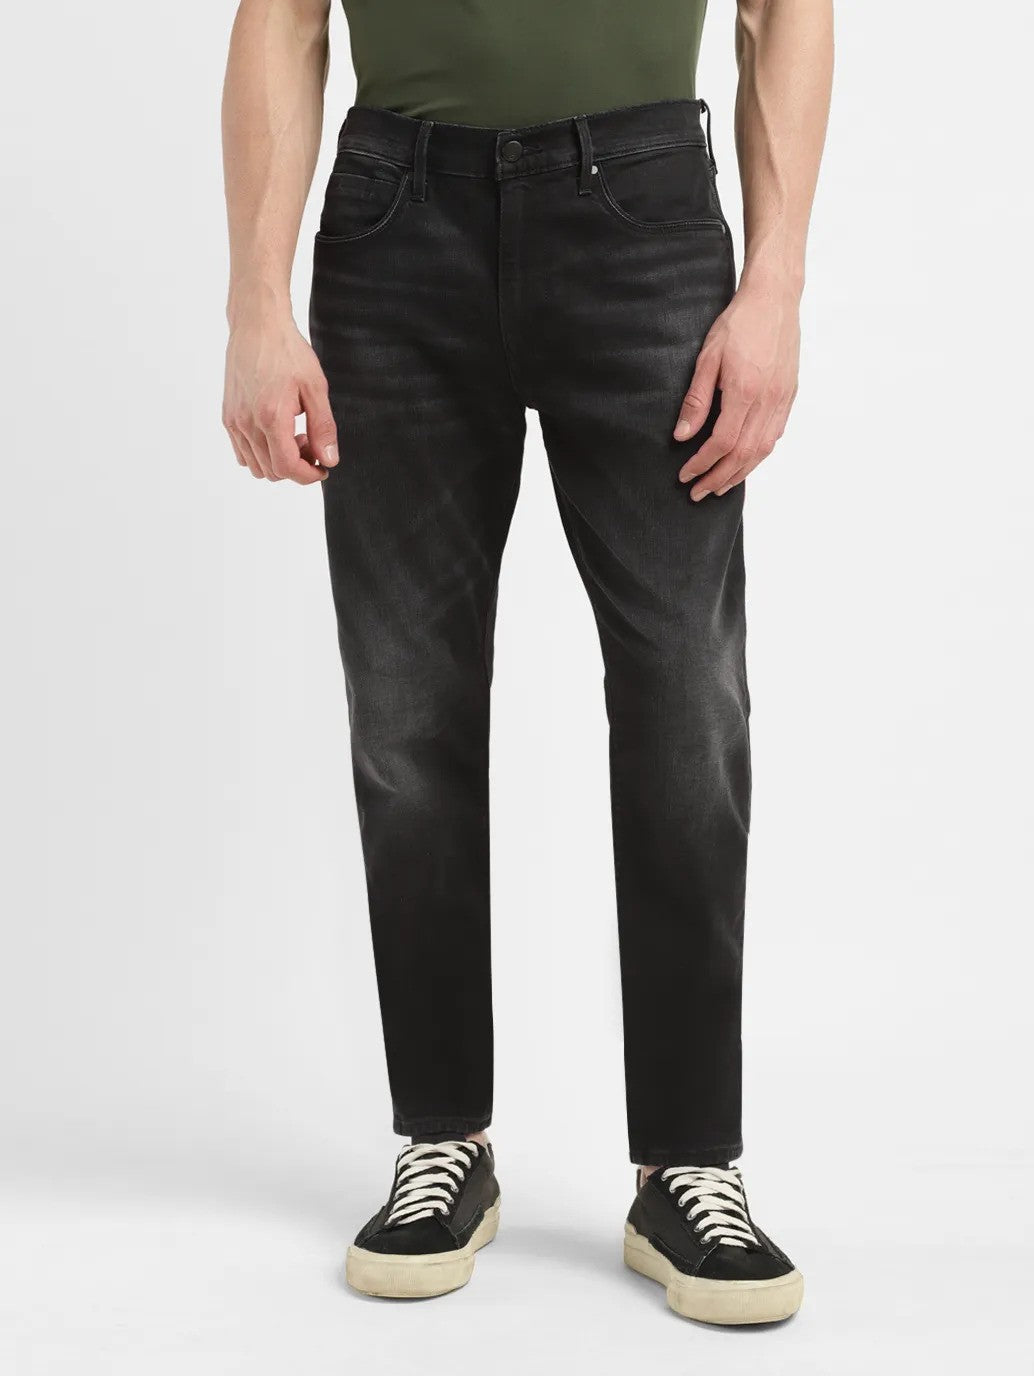 Men's 541 Black Tapered Fit Jeans